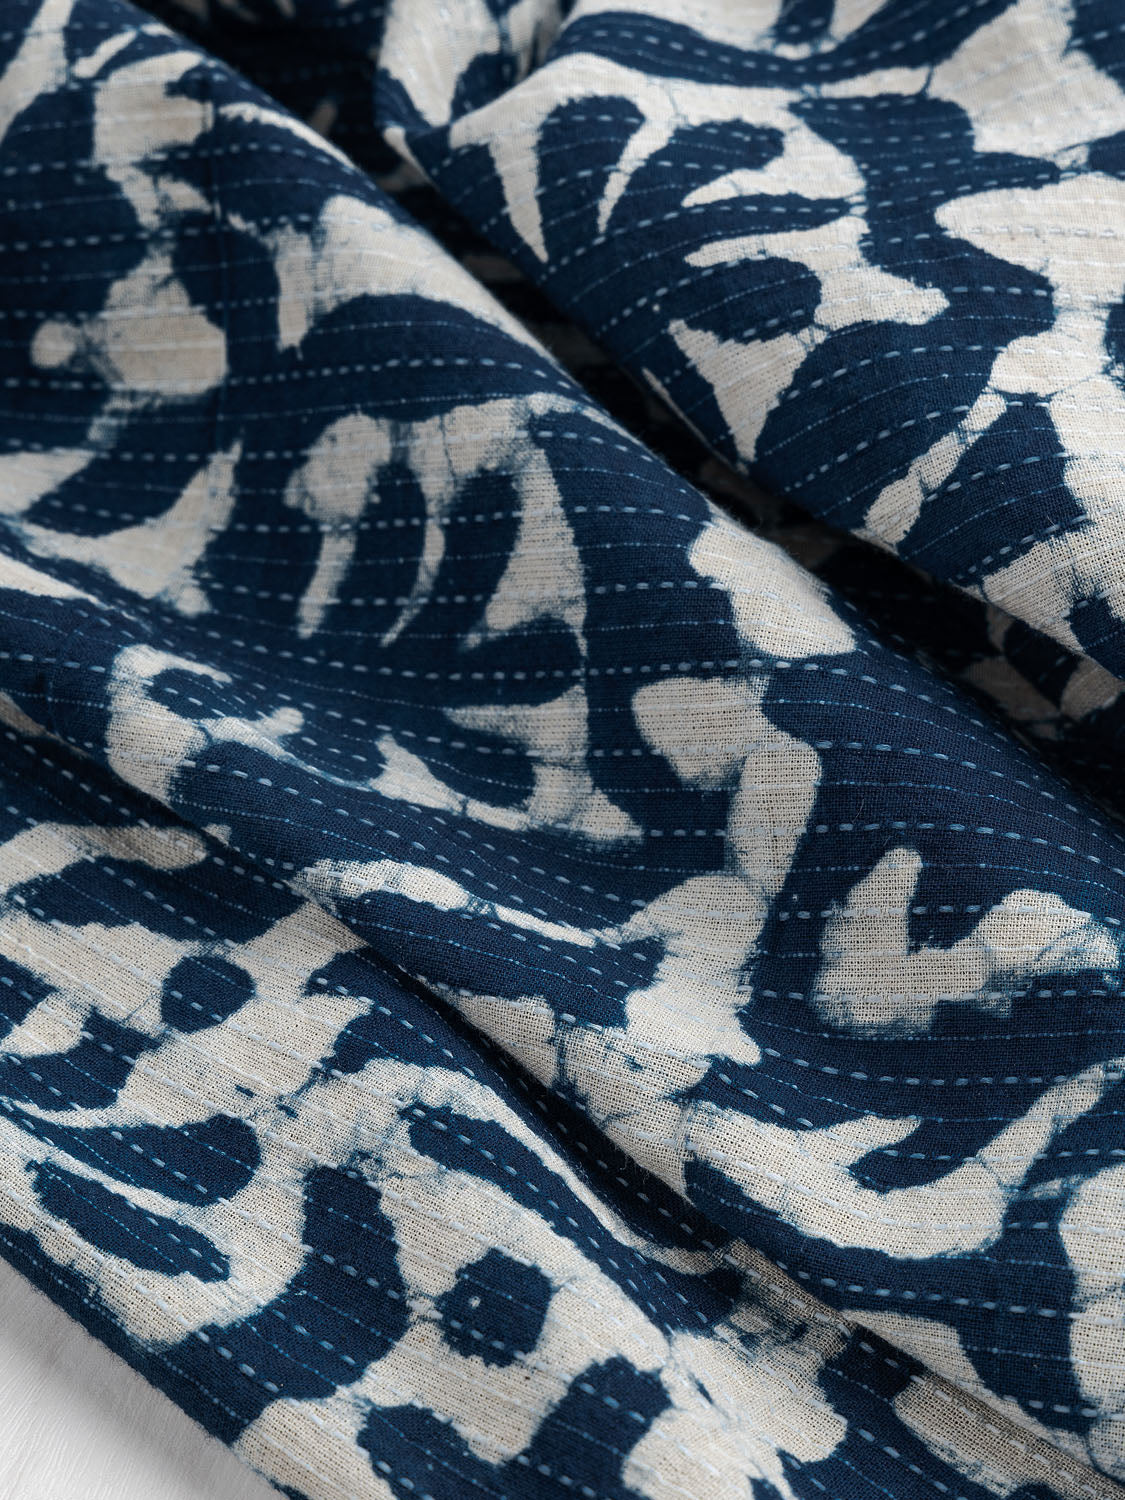 Handloom cotton polyester jacquard designer upholstery fabric